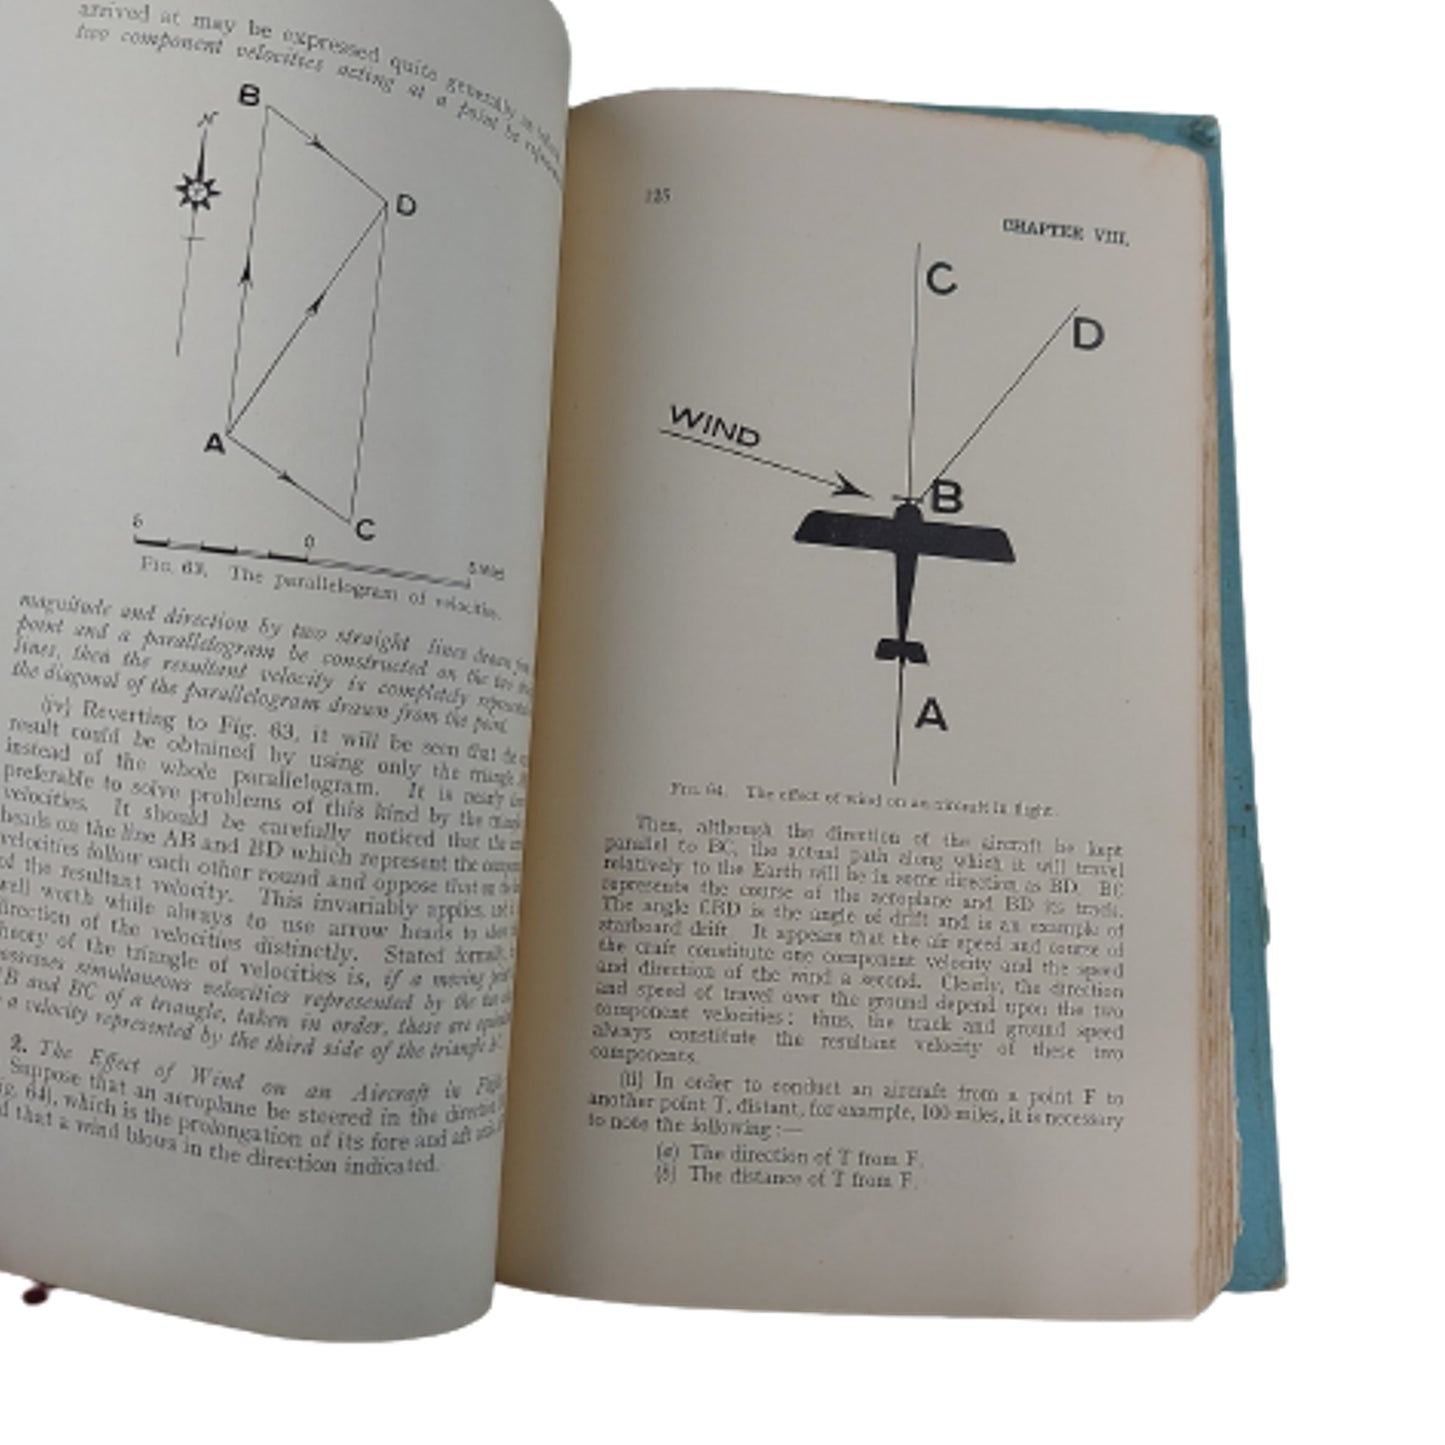 Named British RAF Royal Air Force Manual Of Air Pilotage 1930